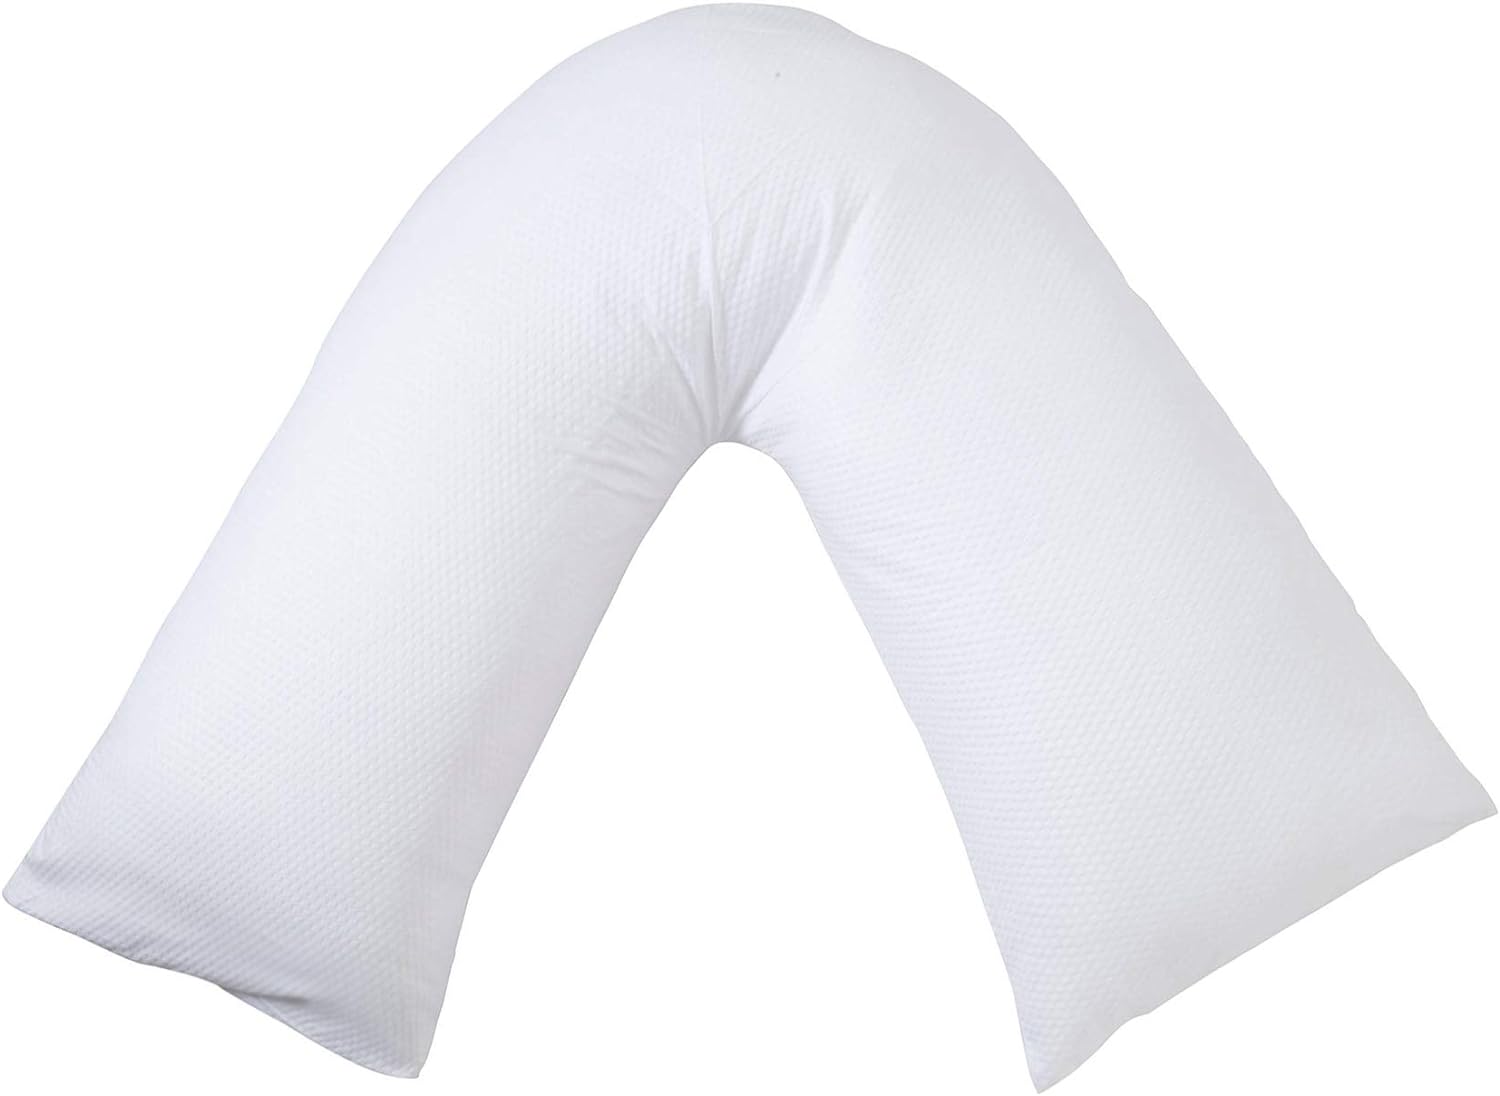 Comfort living V Shaped Pillow Orthopaedic Maternity Pregnancy Nursing Back Neck Support